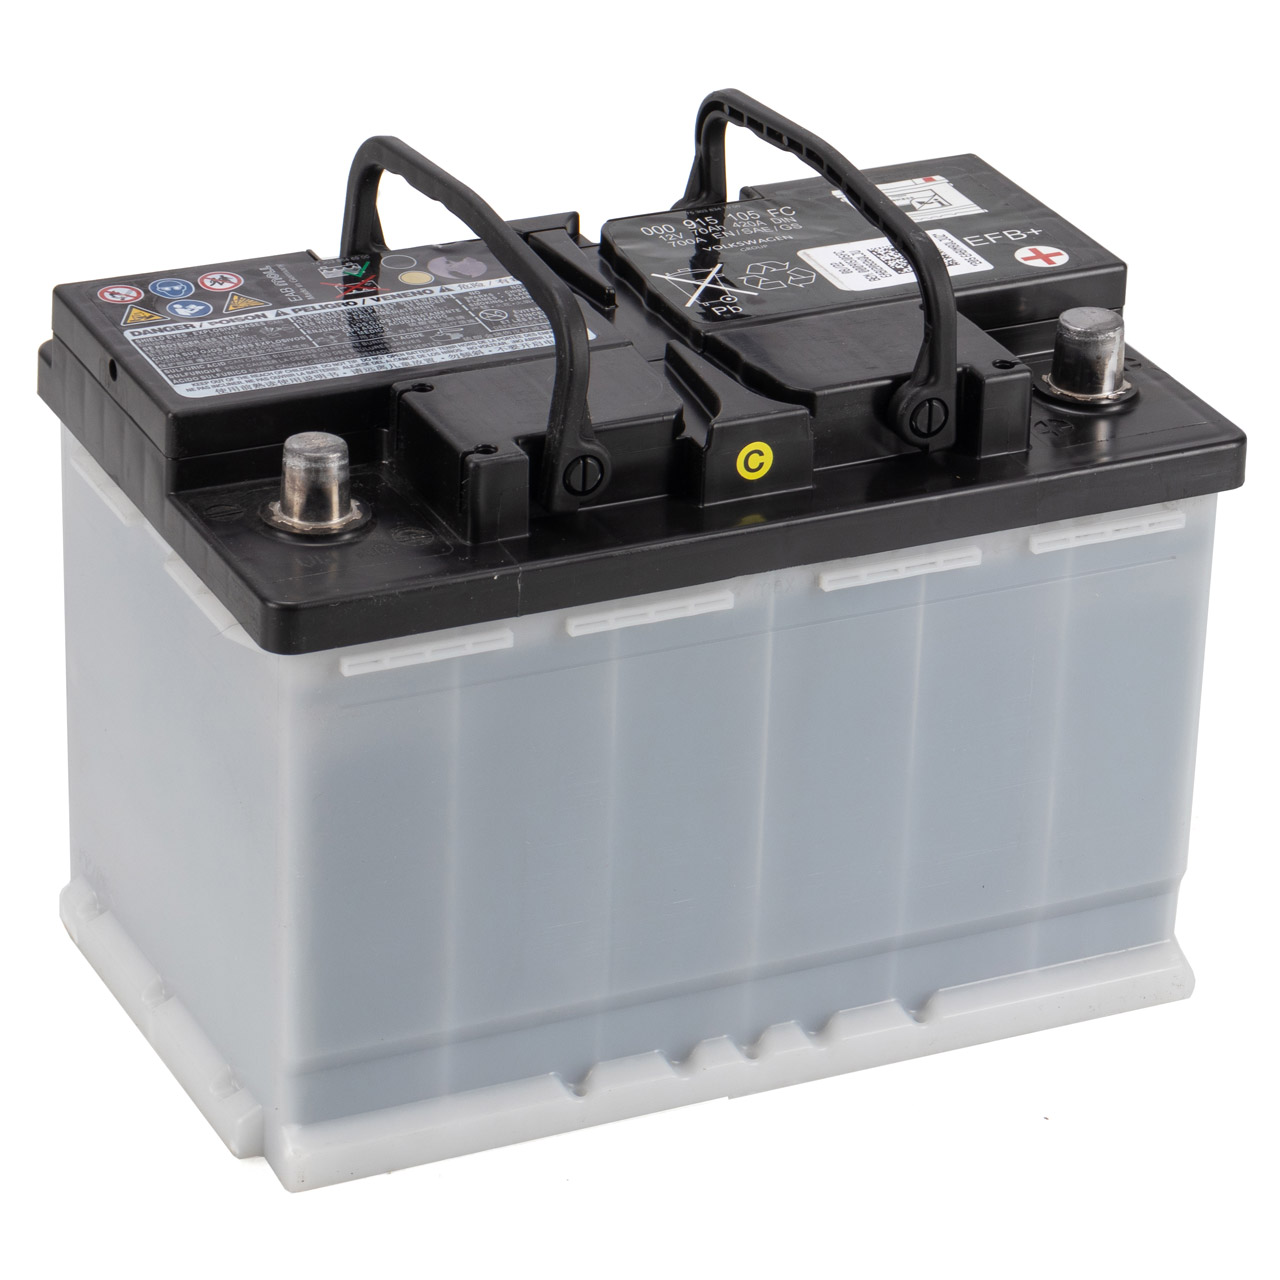 ORIGINAL VW Autobatterie Batterie Starterbatterie 12V 70Ah 420/700A 000915089AC